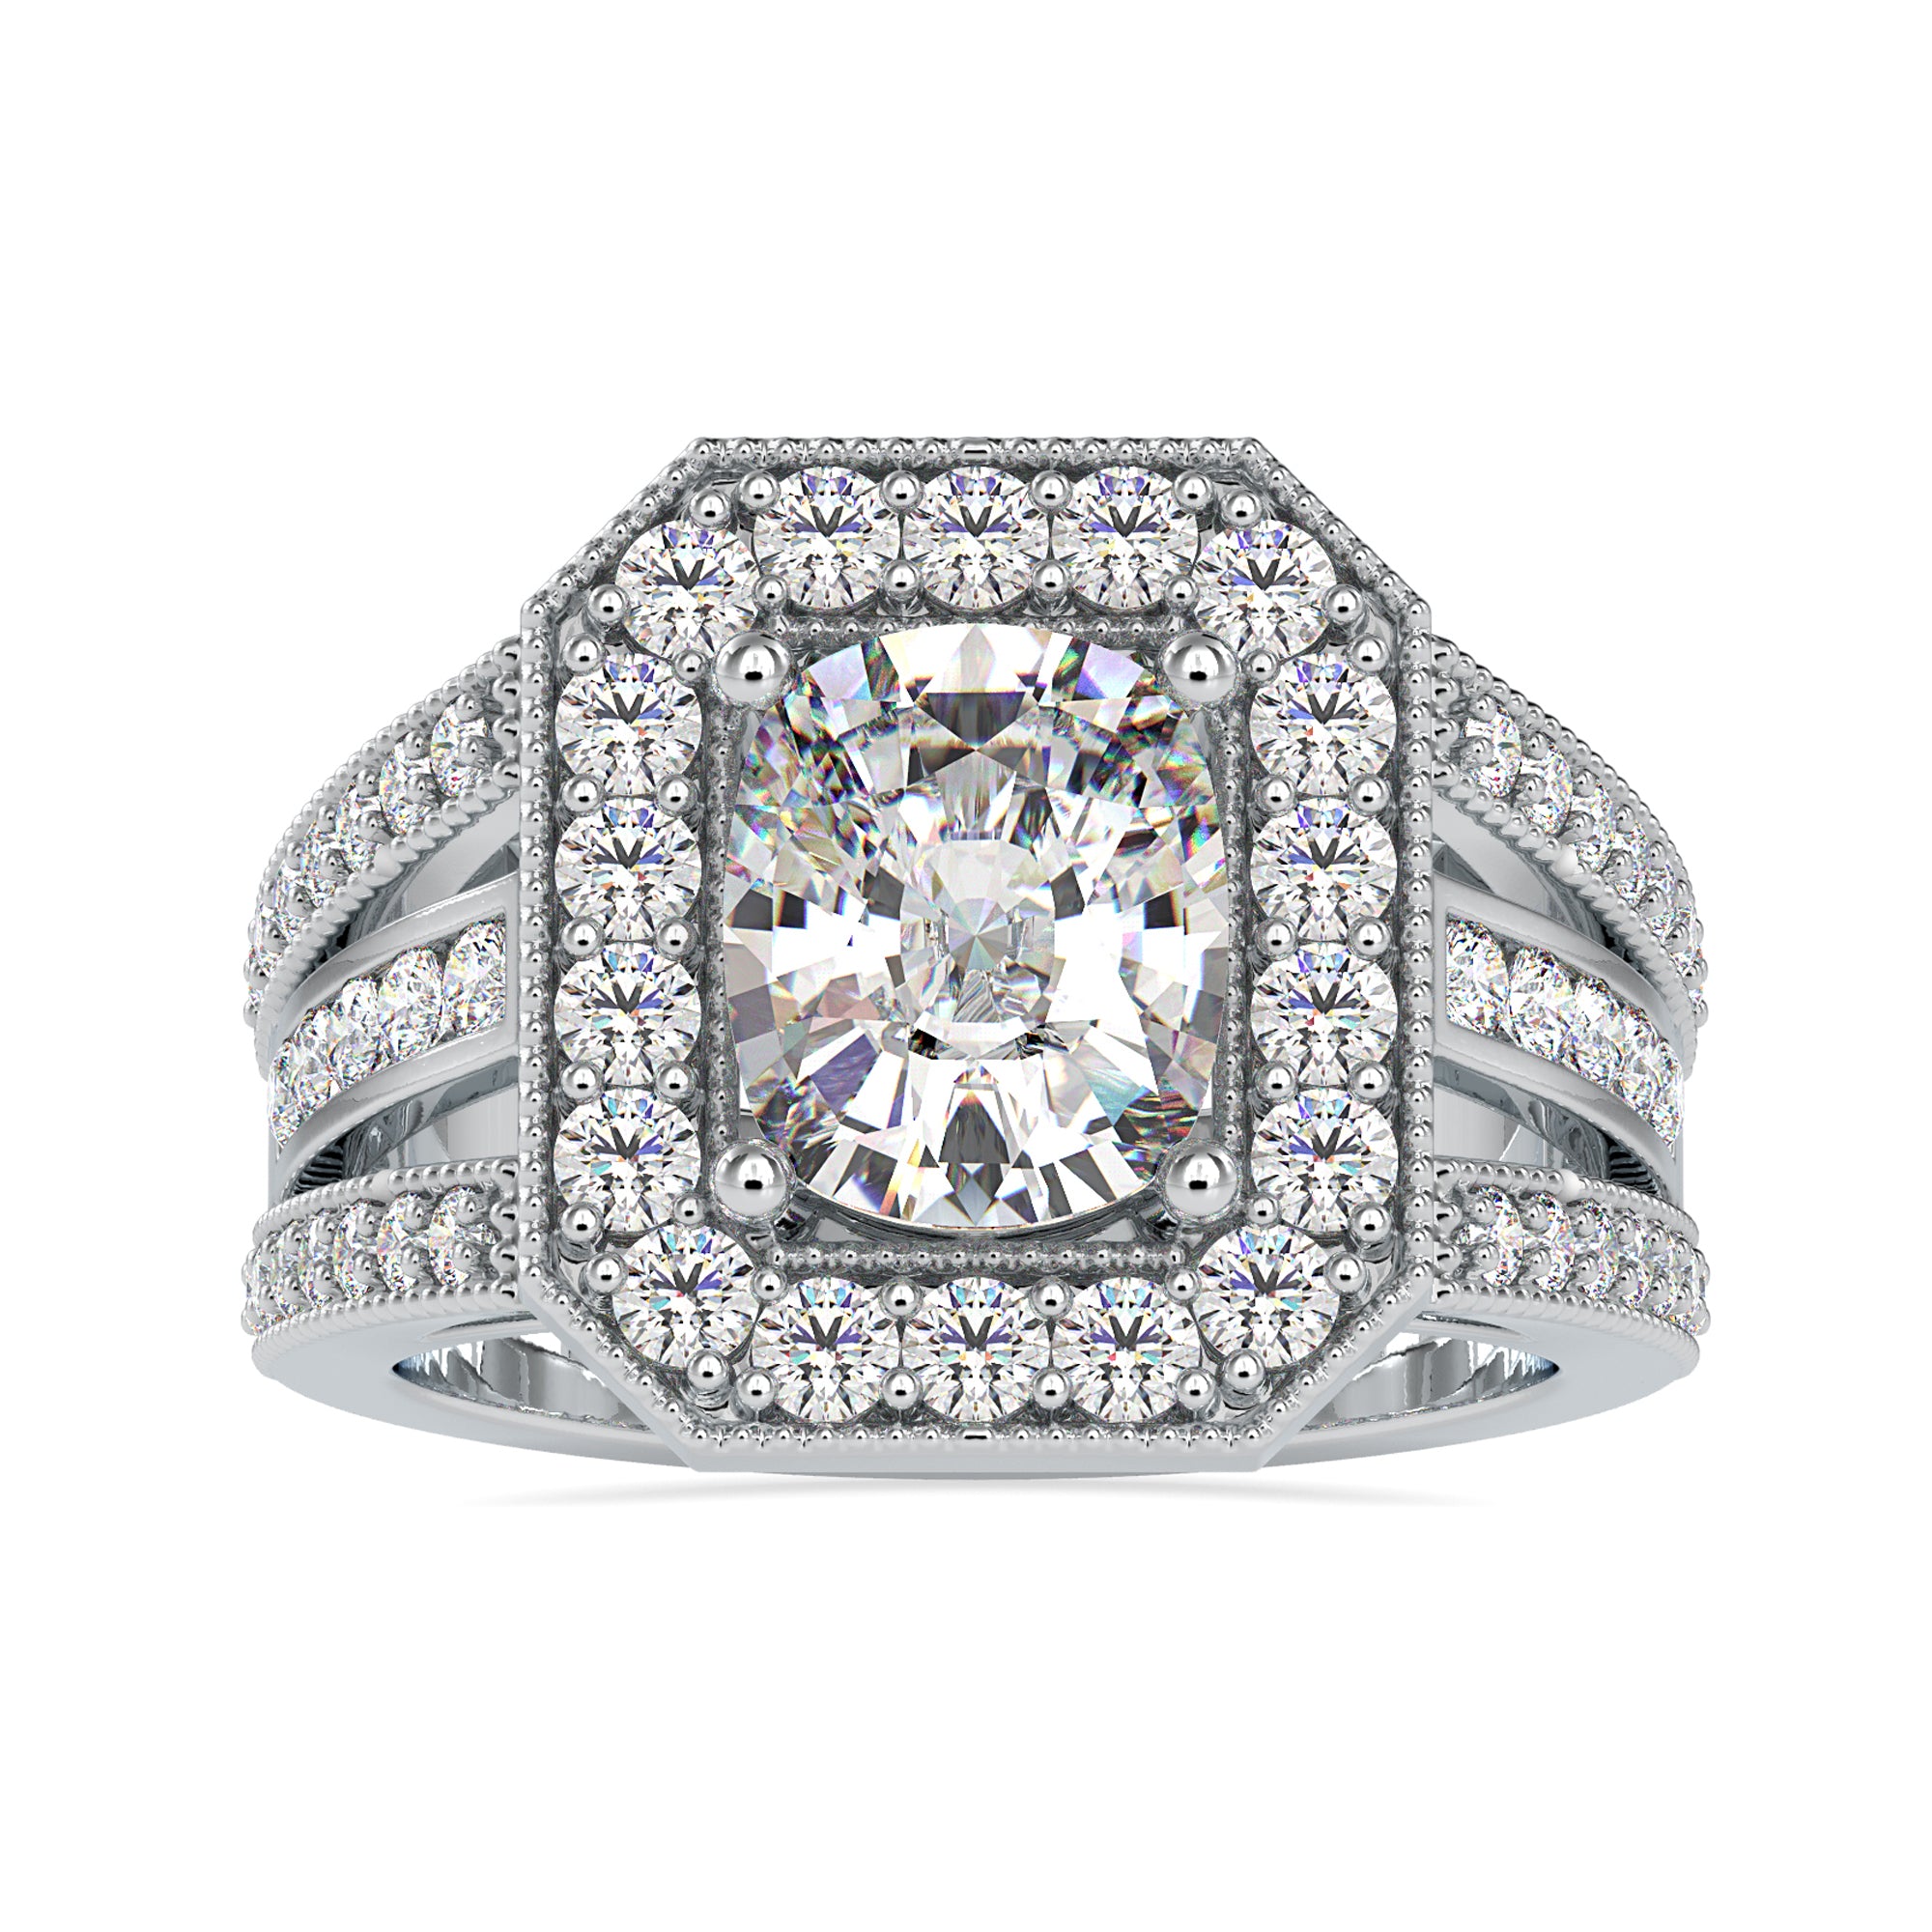 vintage style engagement ring - diamondrensu